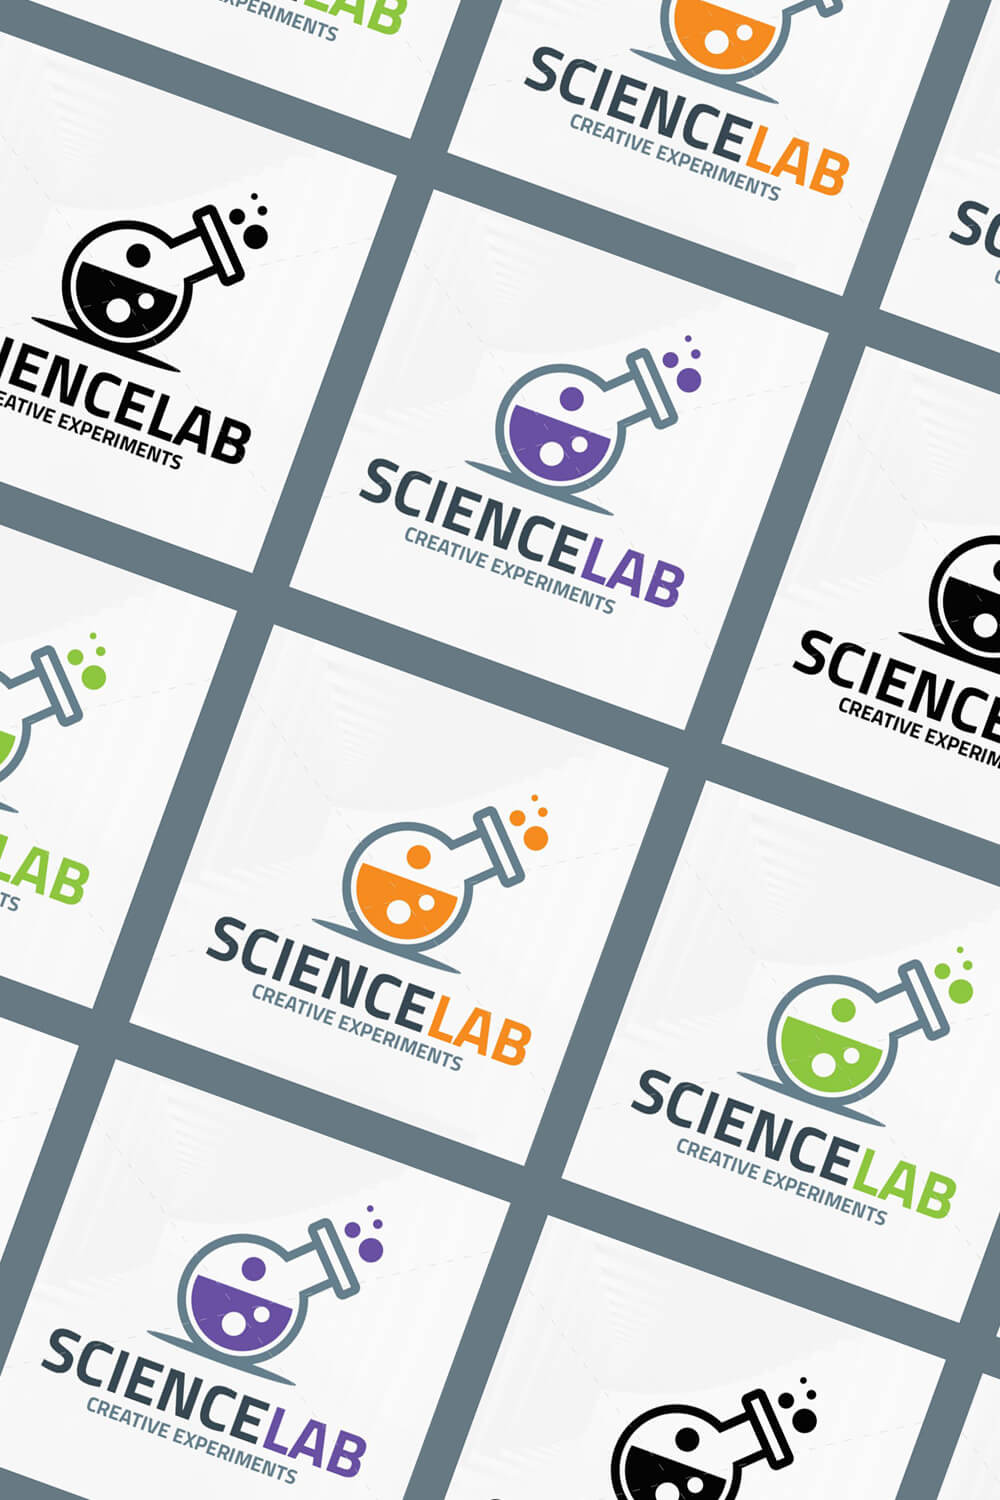 Diagonal image of science laboratory logos.